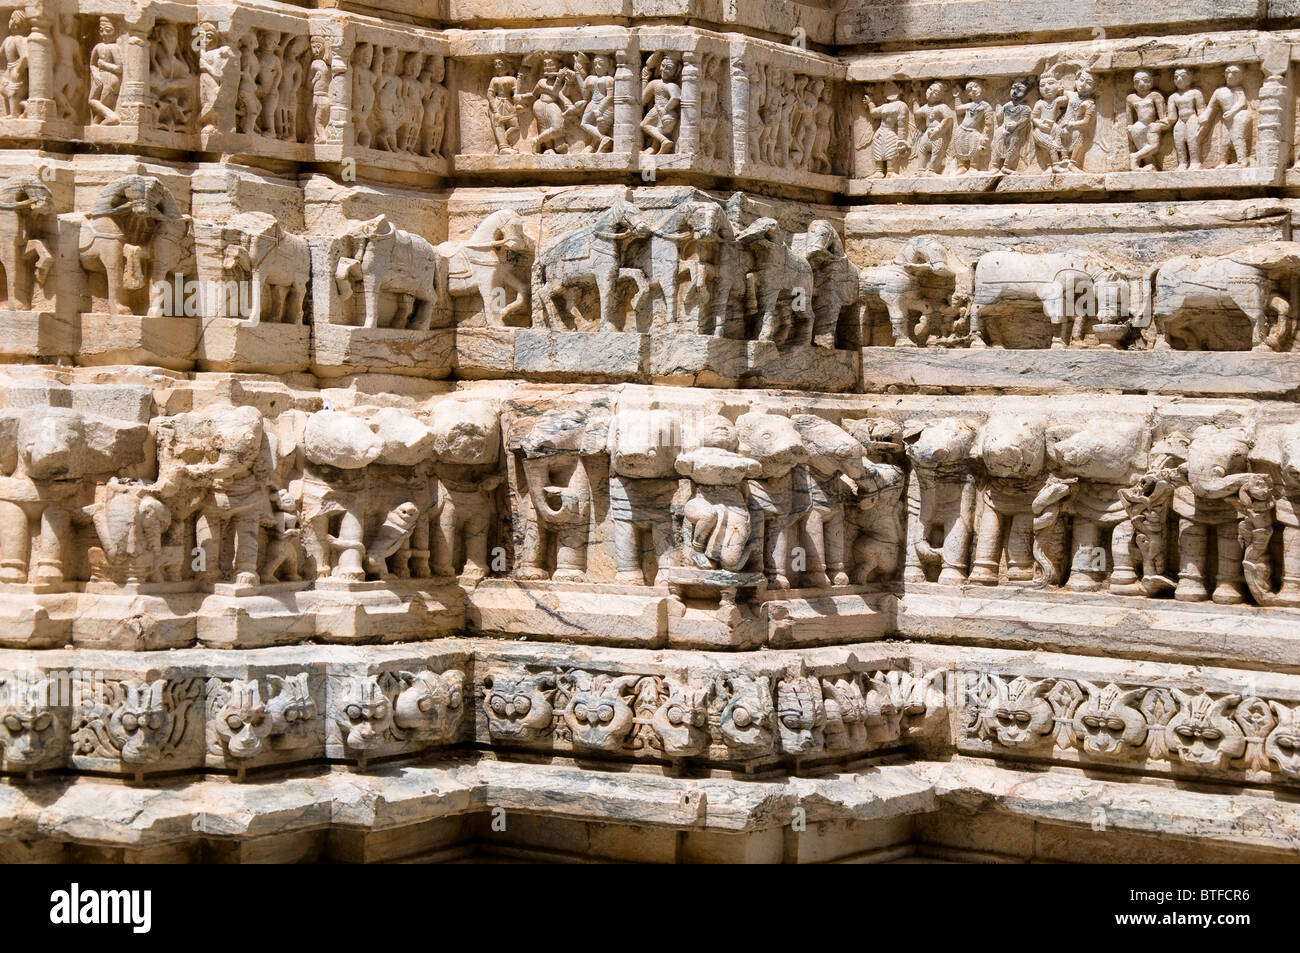 Stone Carvings, Jagdish temple, Udaipur, Rajasthan, India Stock Photo